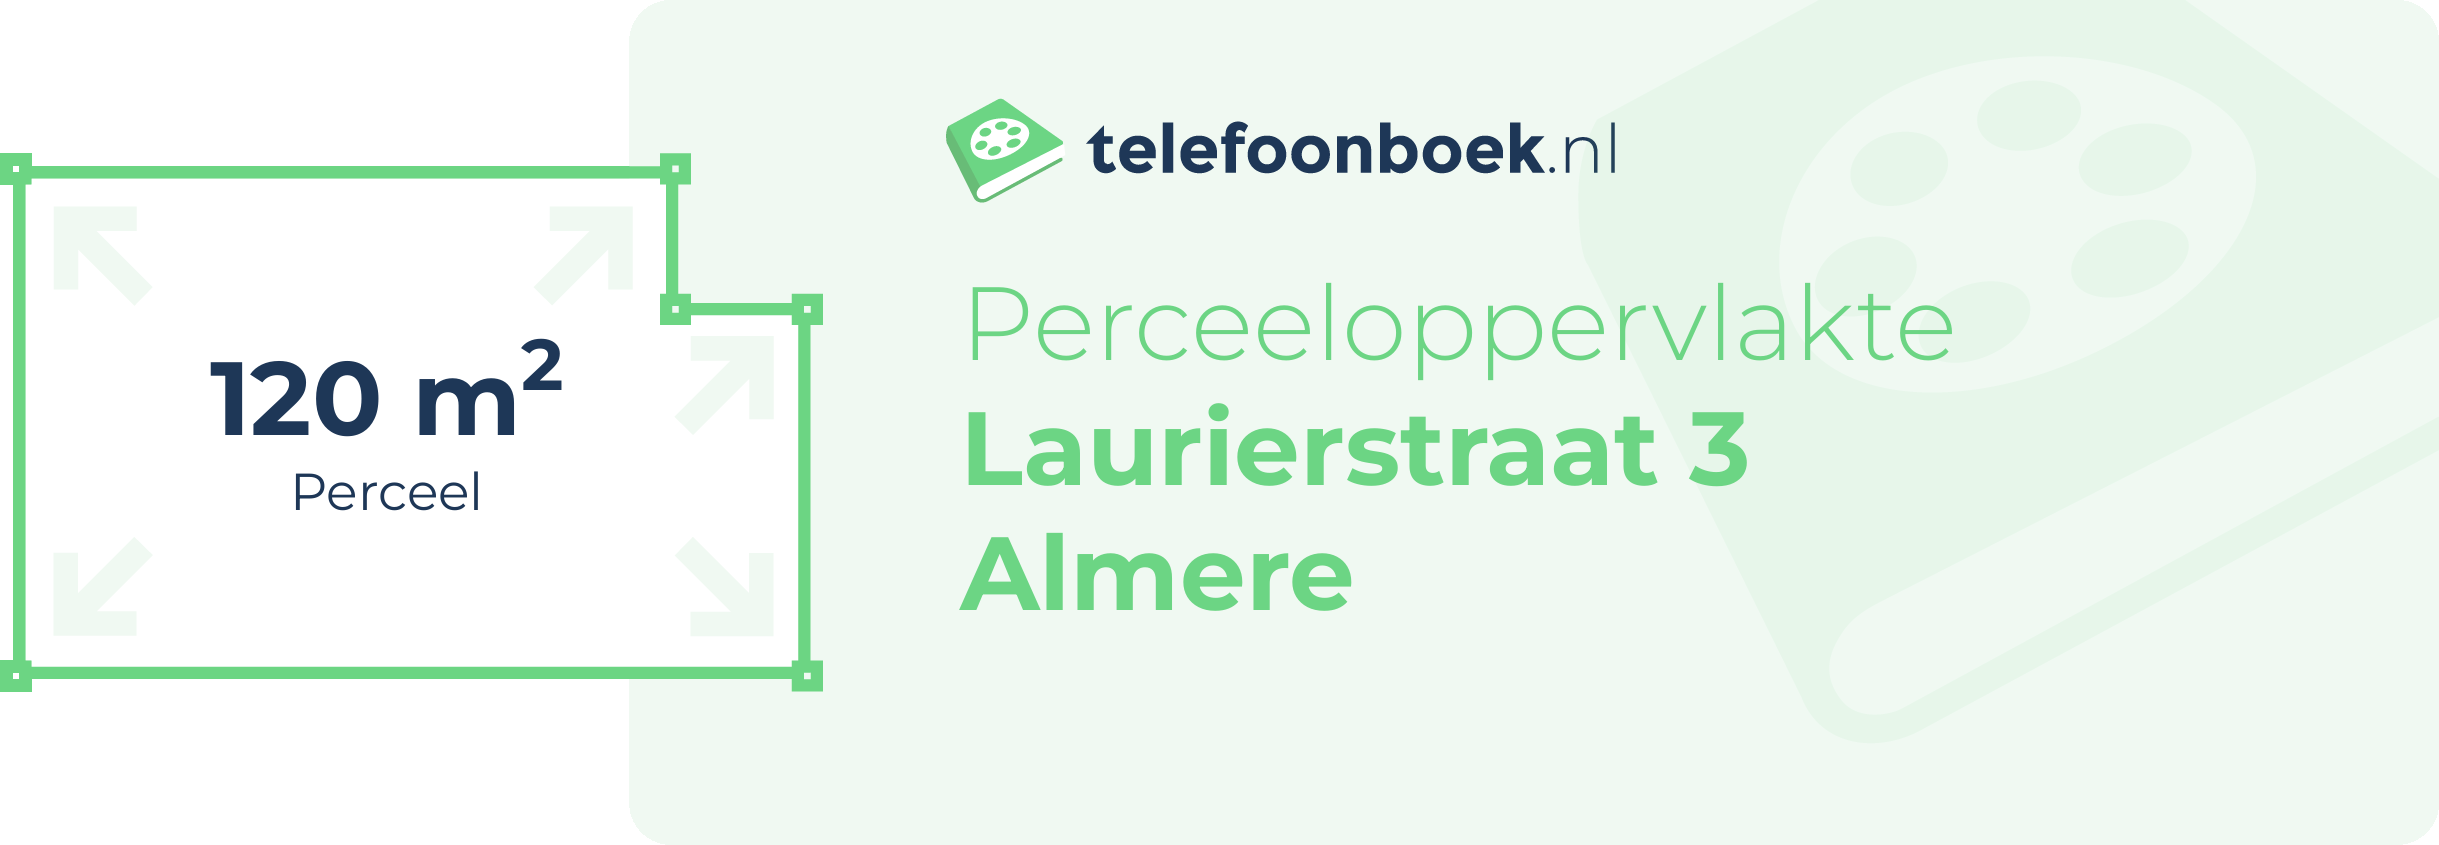 Perceeloppervlakte Laurierstraat 3 Almere